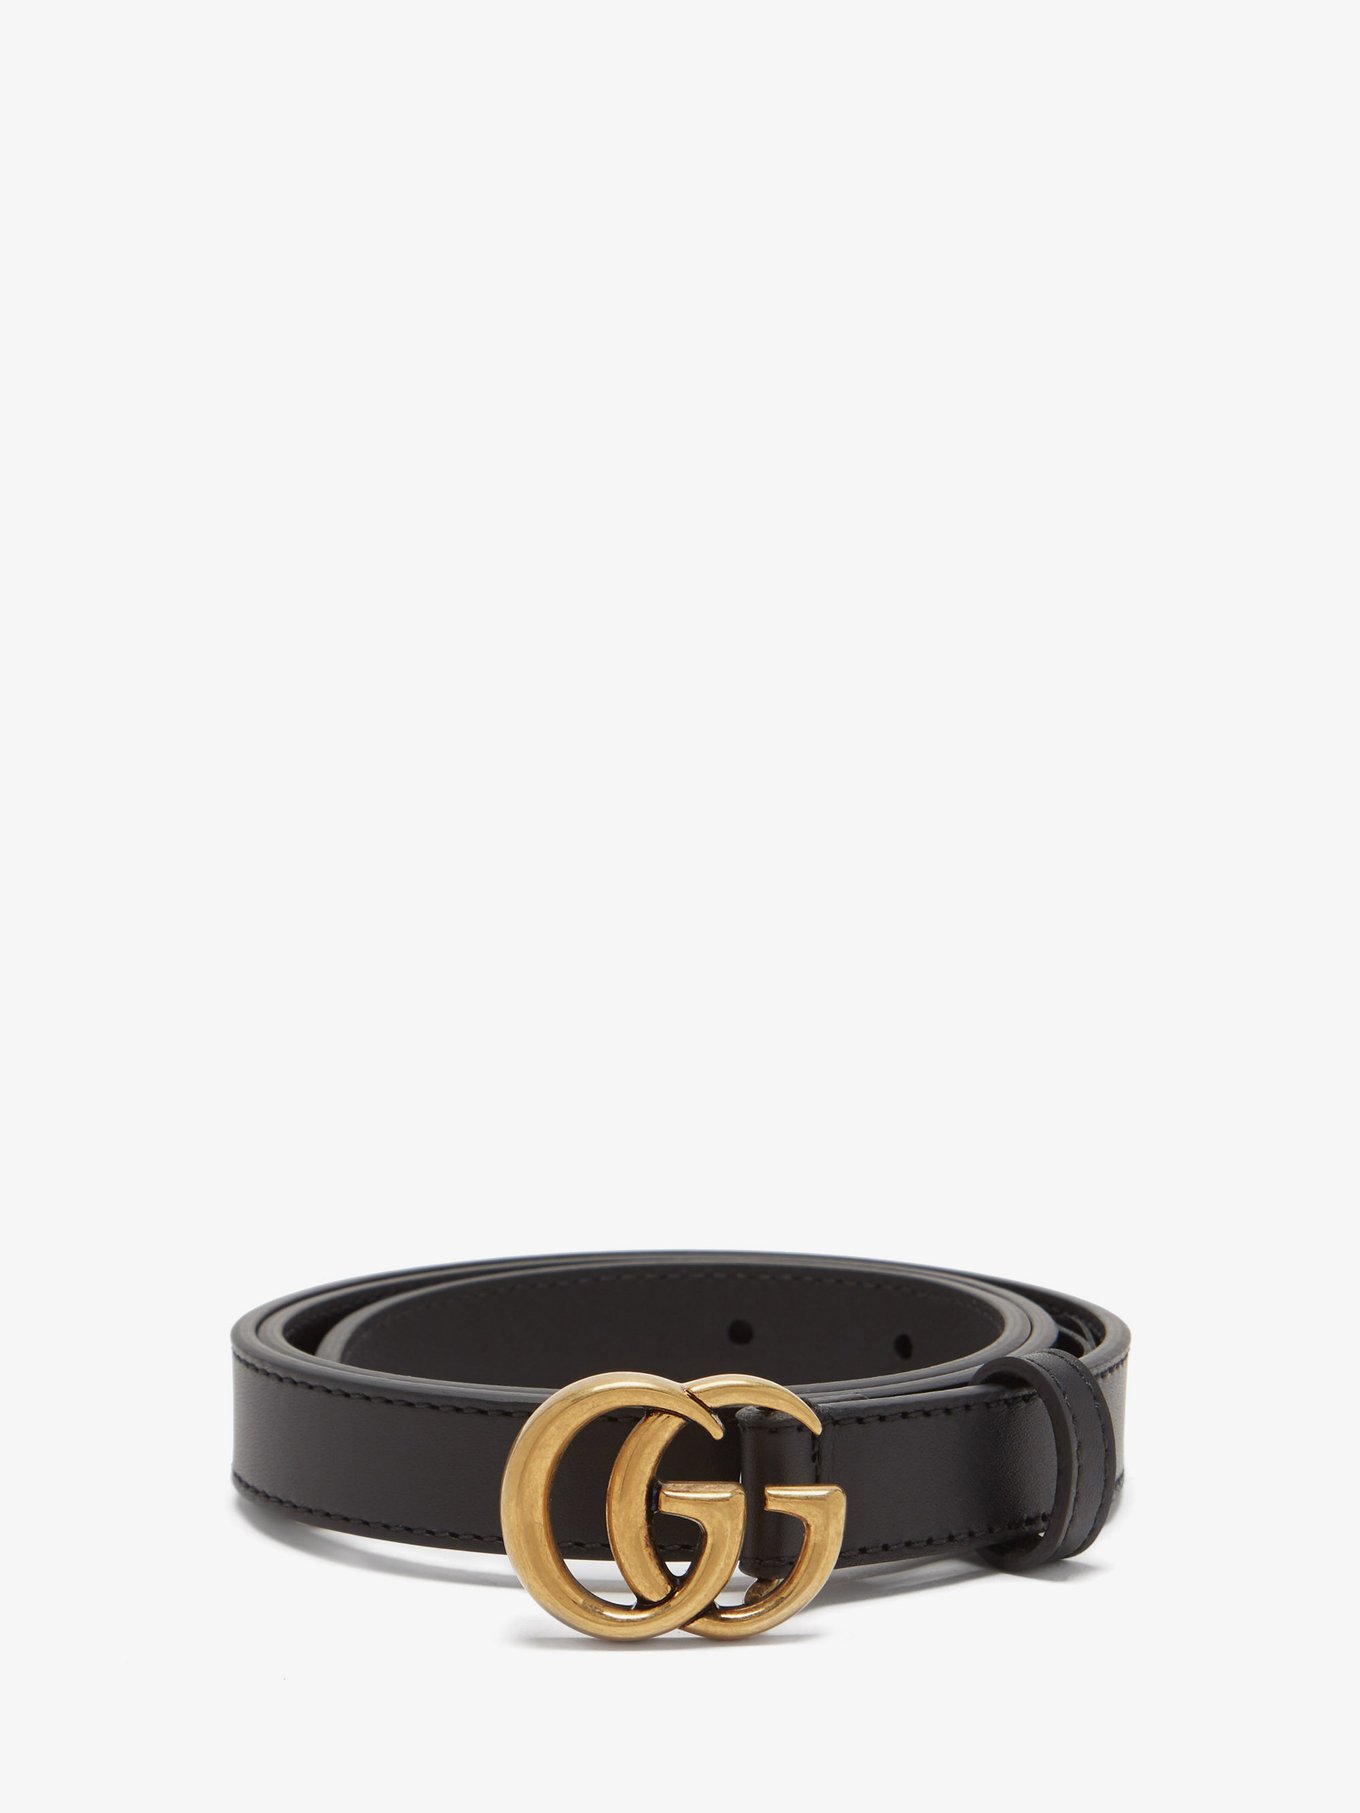 Signature GG-logo leather belt | Gucci